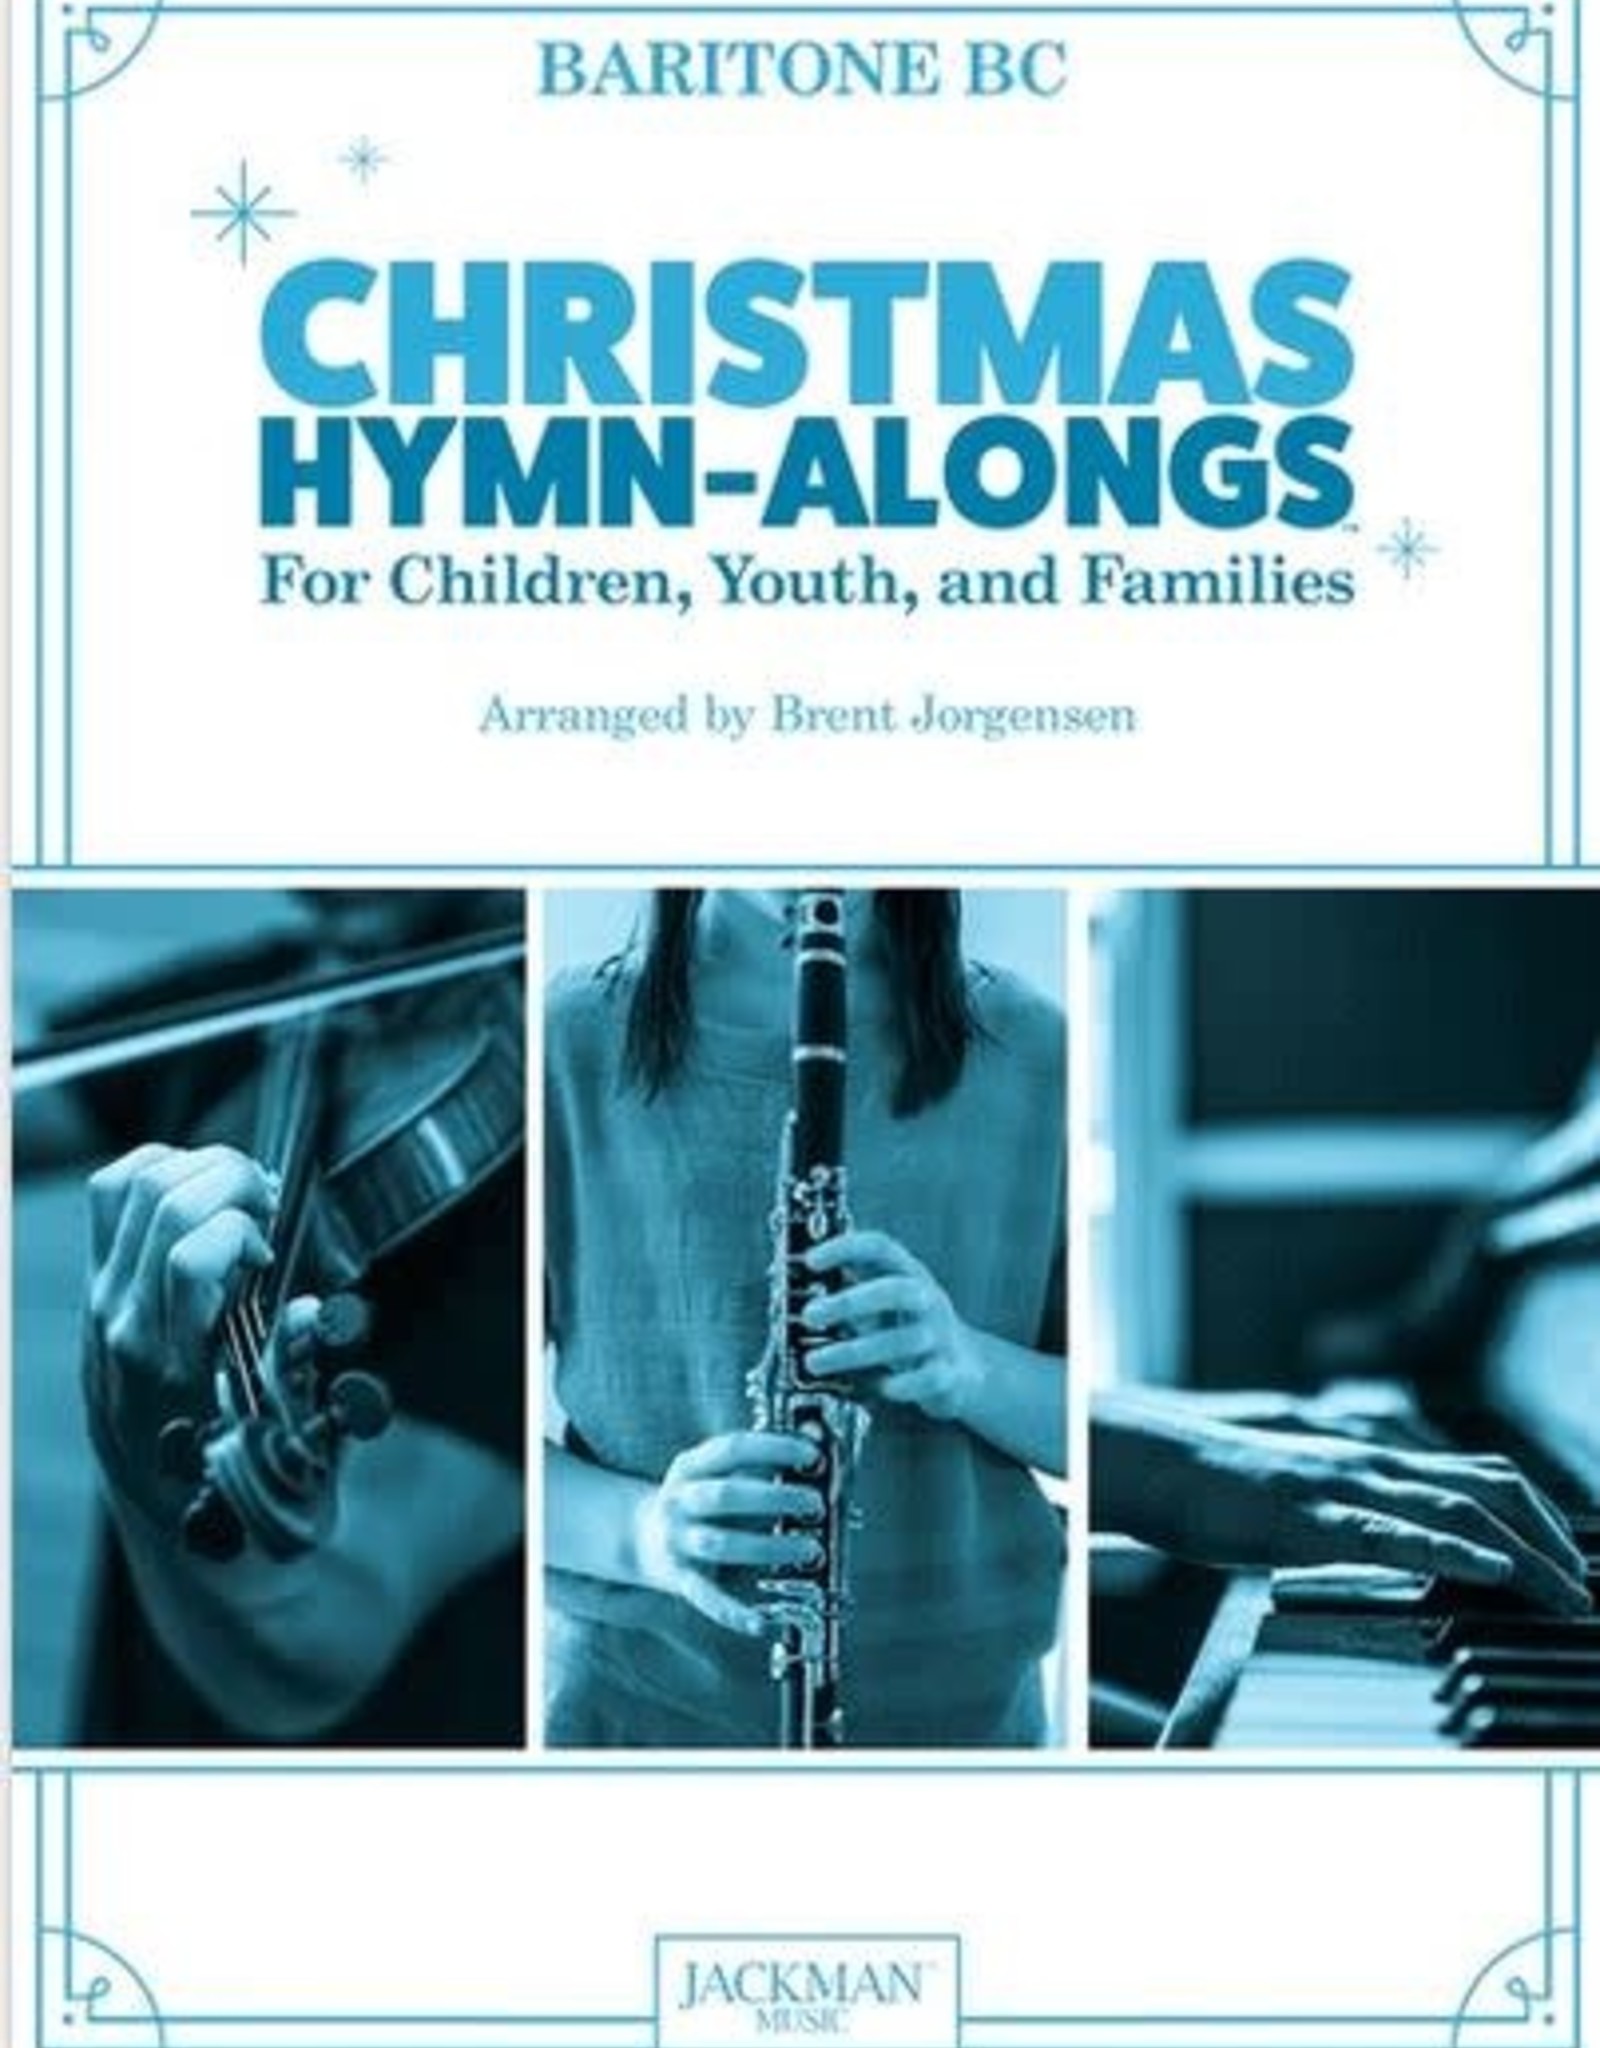 Jackman Music Christmas Hymn-Alongs - arr. Brent Jorgensen - Baritone B.C.